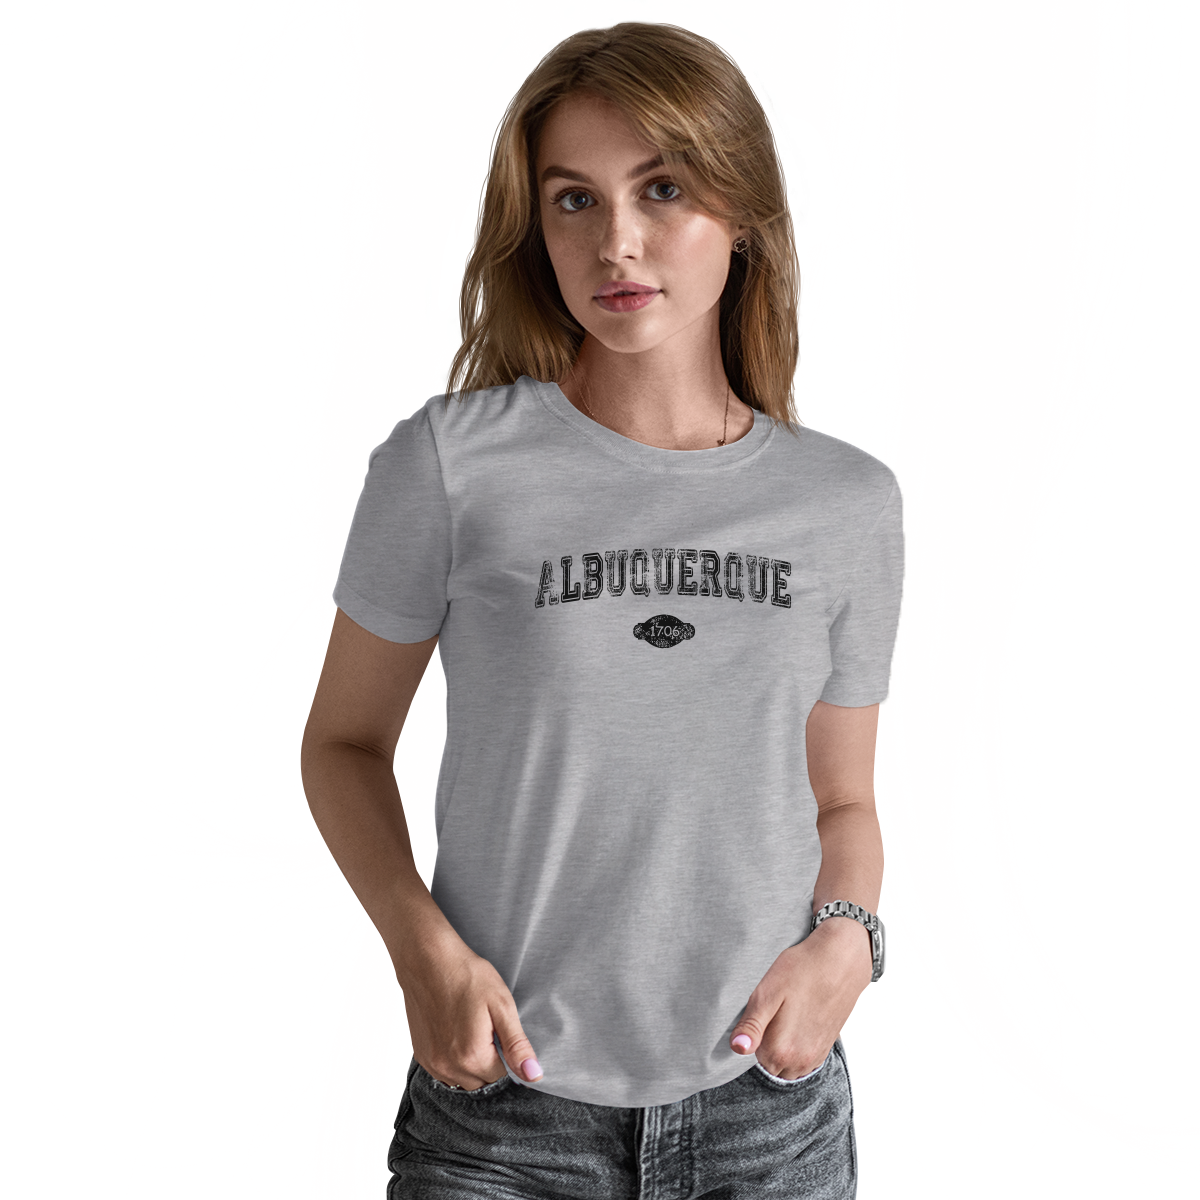 Albuquerque 1706 Represent Women's T-shirt | Gray